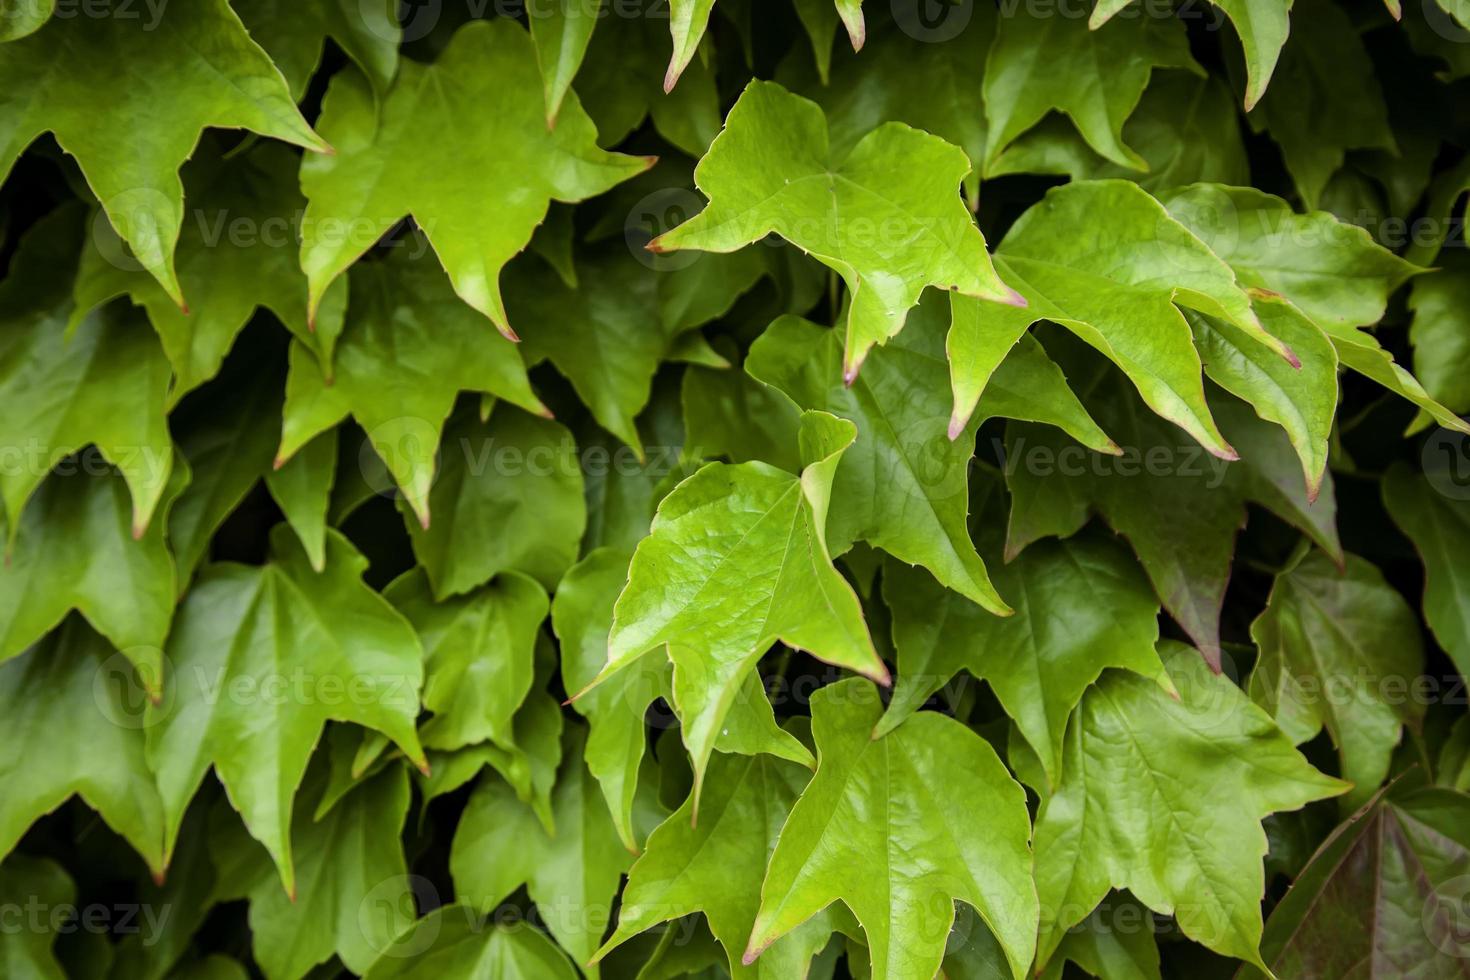 Green ivy wall photo